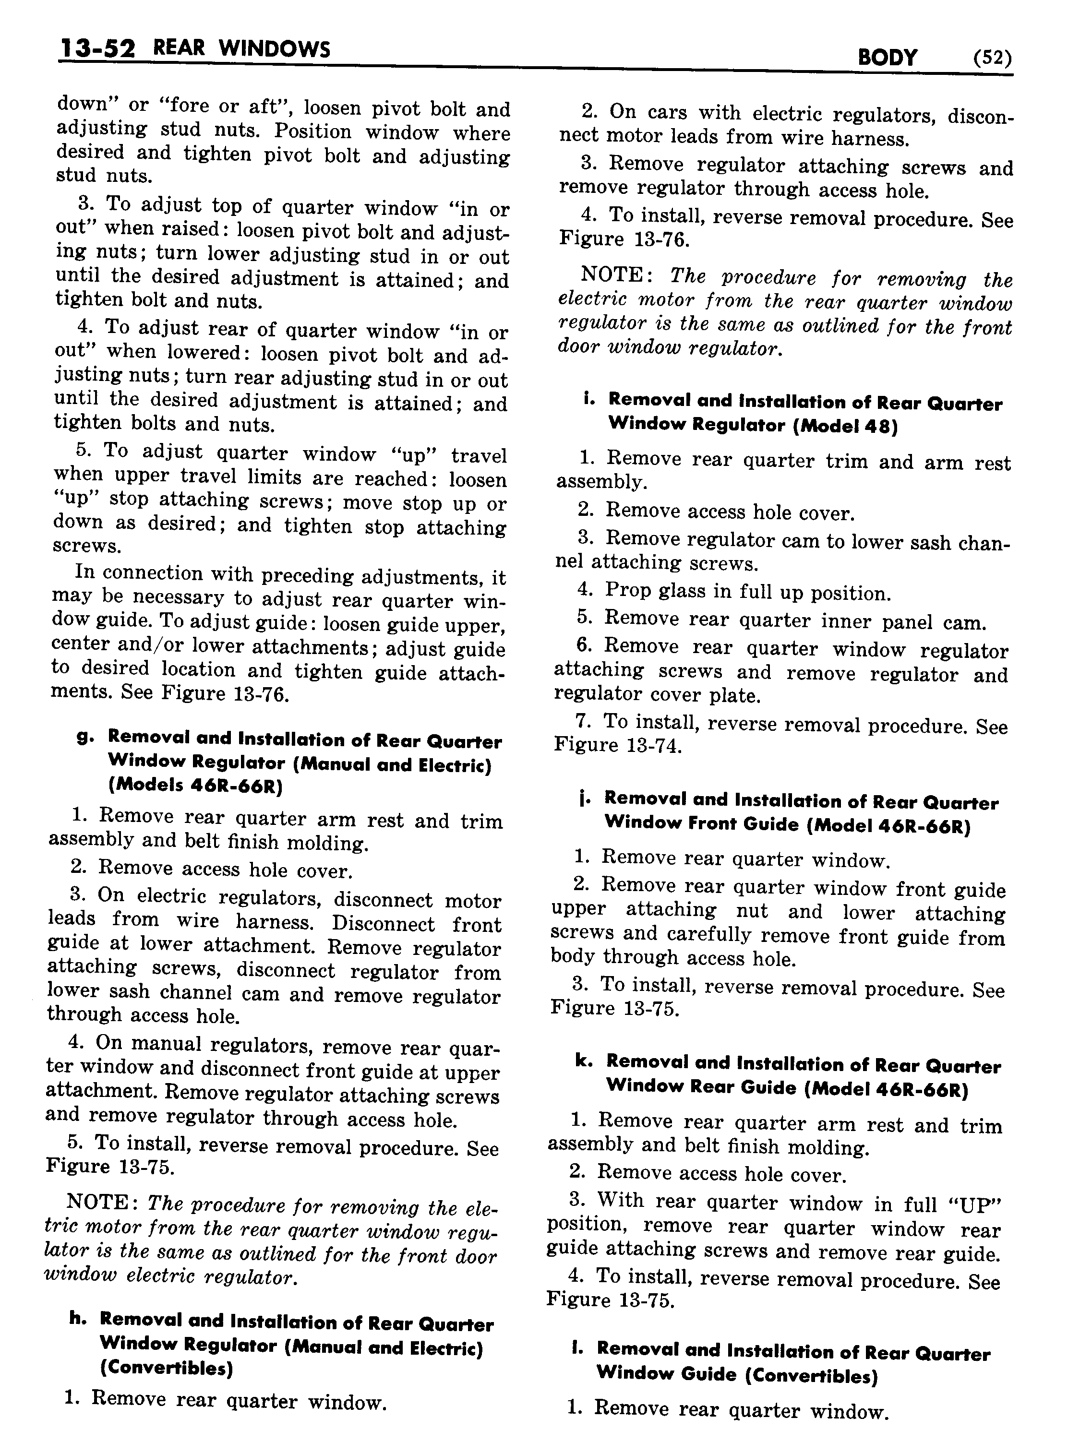 n_1957 Buick Body Service Manual-054-054.jpg